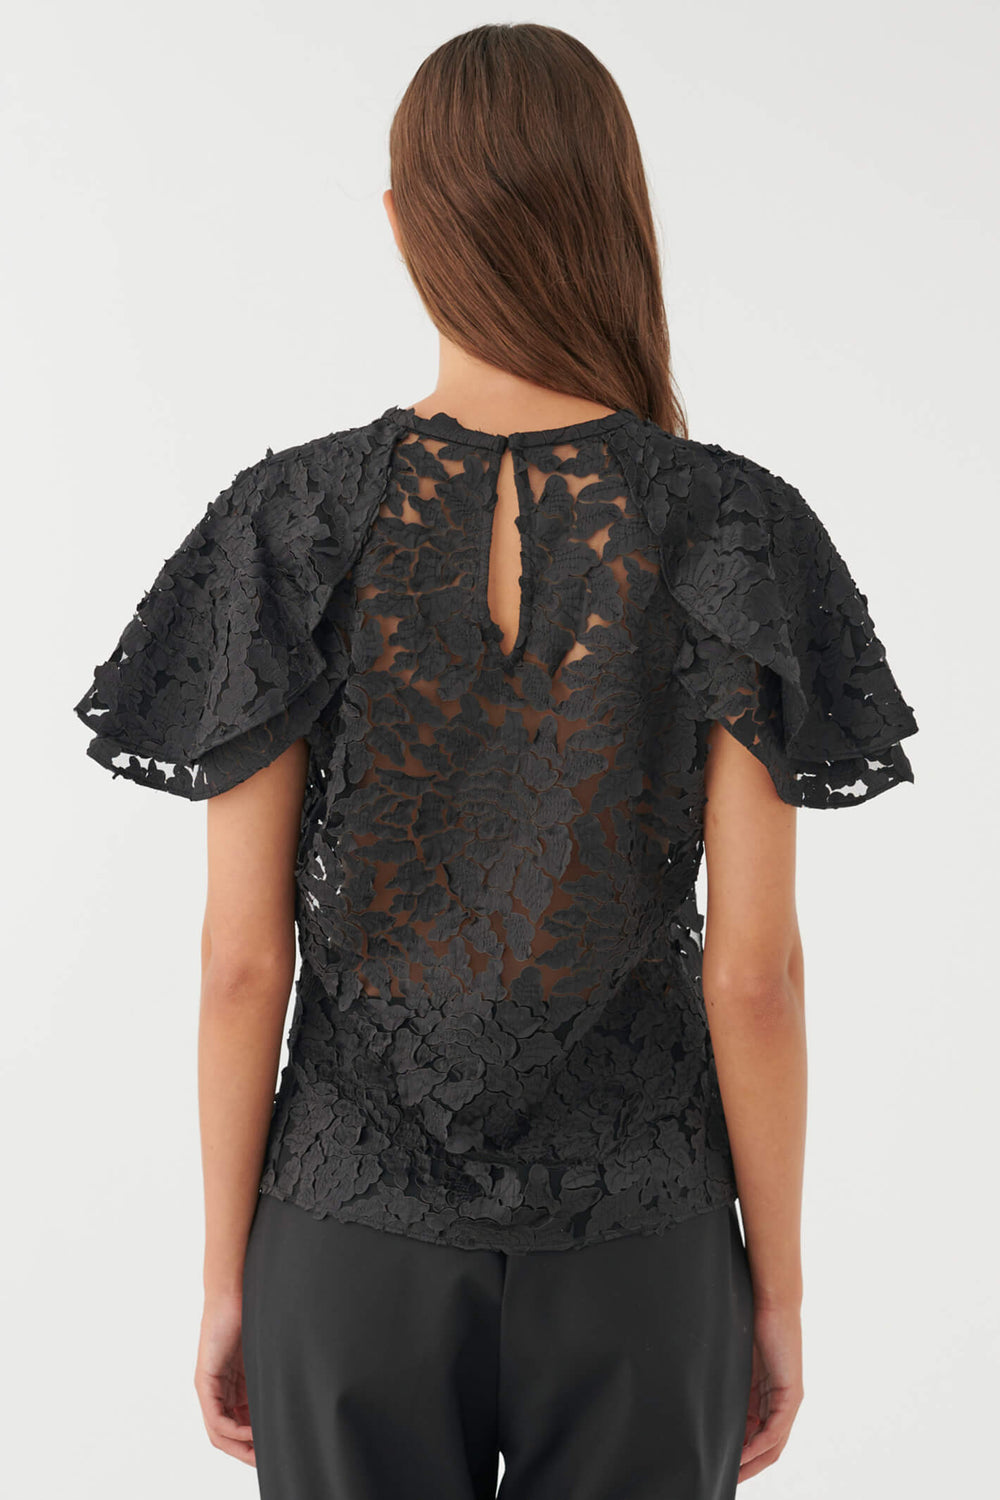 Dea Kudibal Delilah 1231023 Black Layered Sleeve Blouse - Olivia Grace Fashion